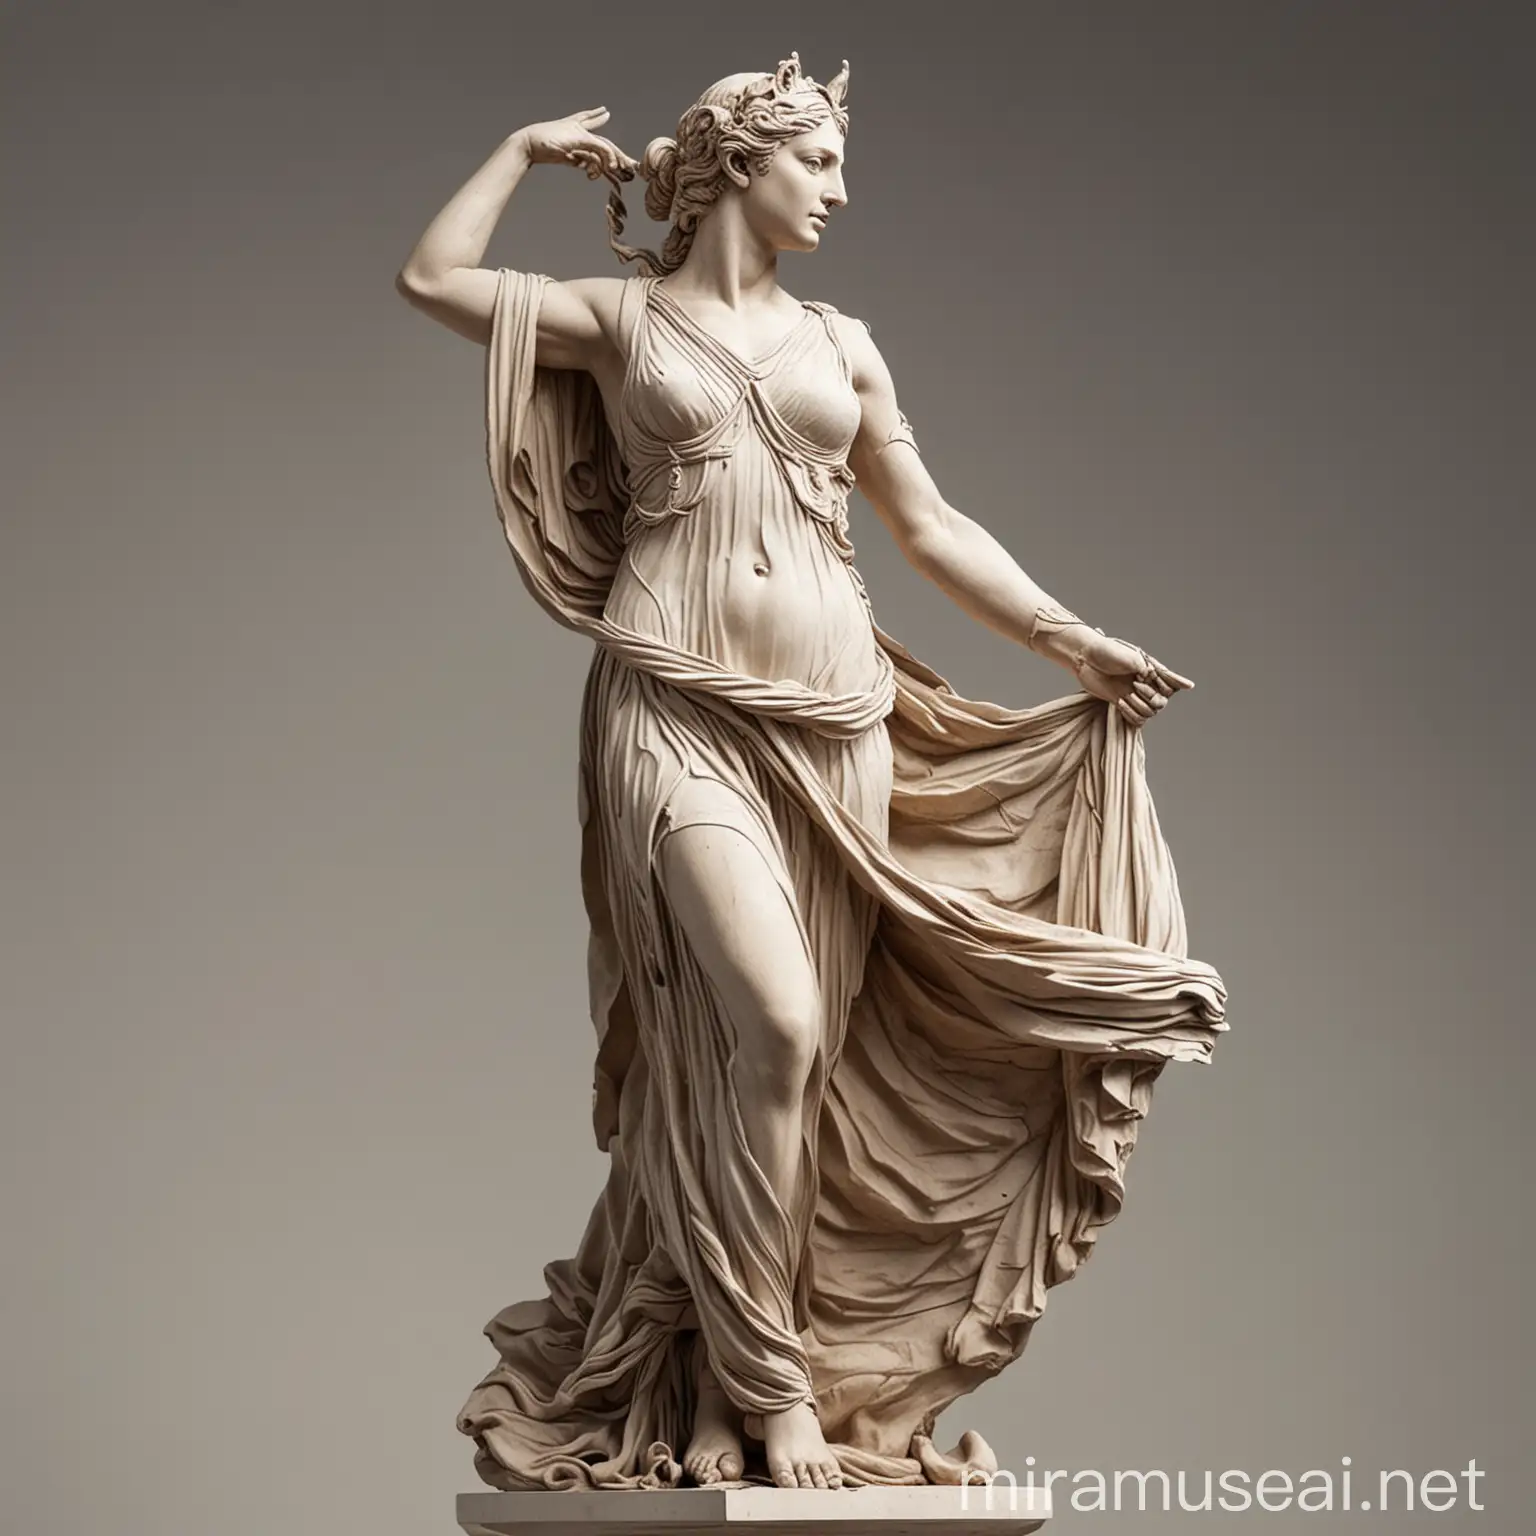 Majestic Greek Goddess Sculpture in Dynamic Pose